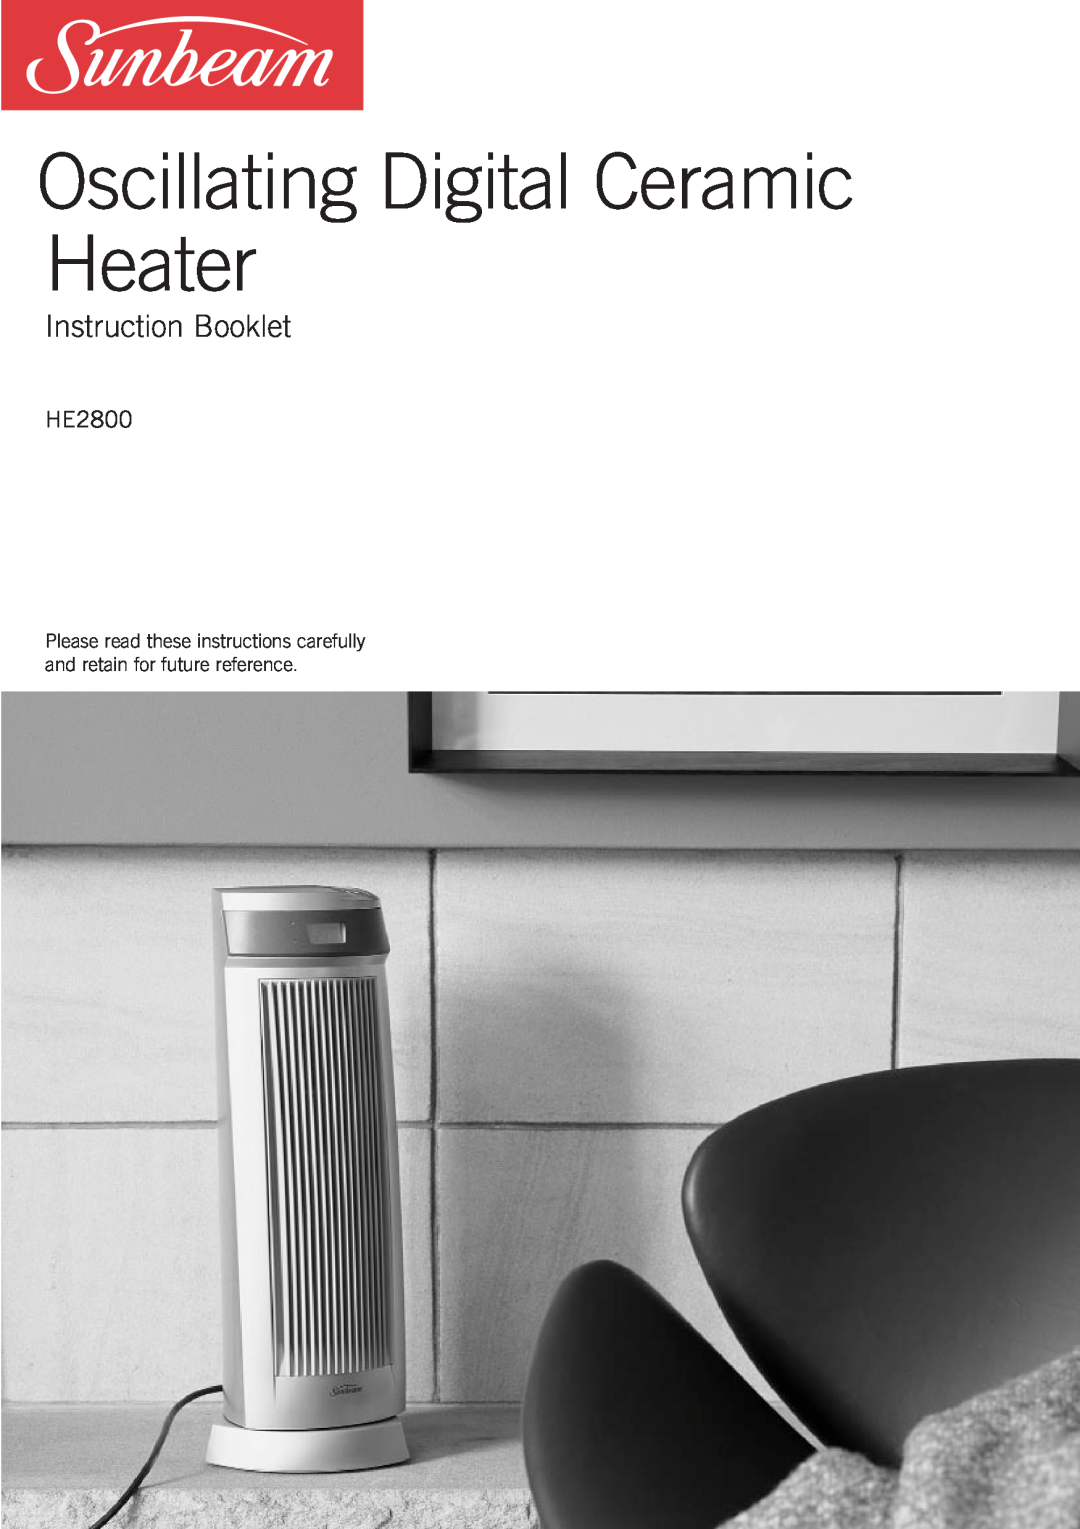 Sunbeam HE2800 manual Instruction Booklet, Oscillating Digital Ceramic Heater 